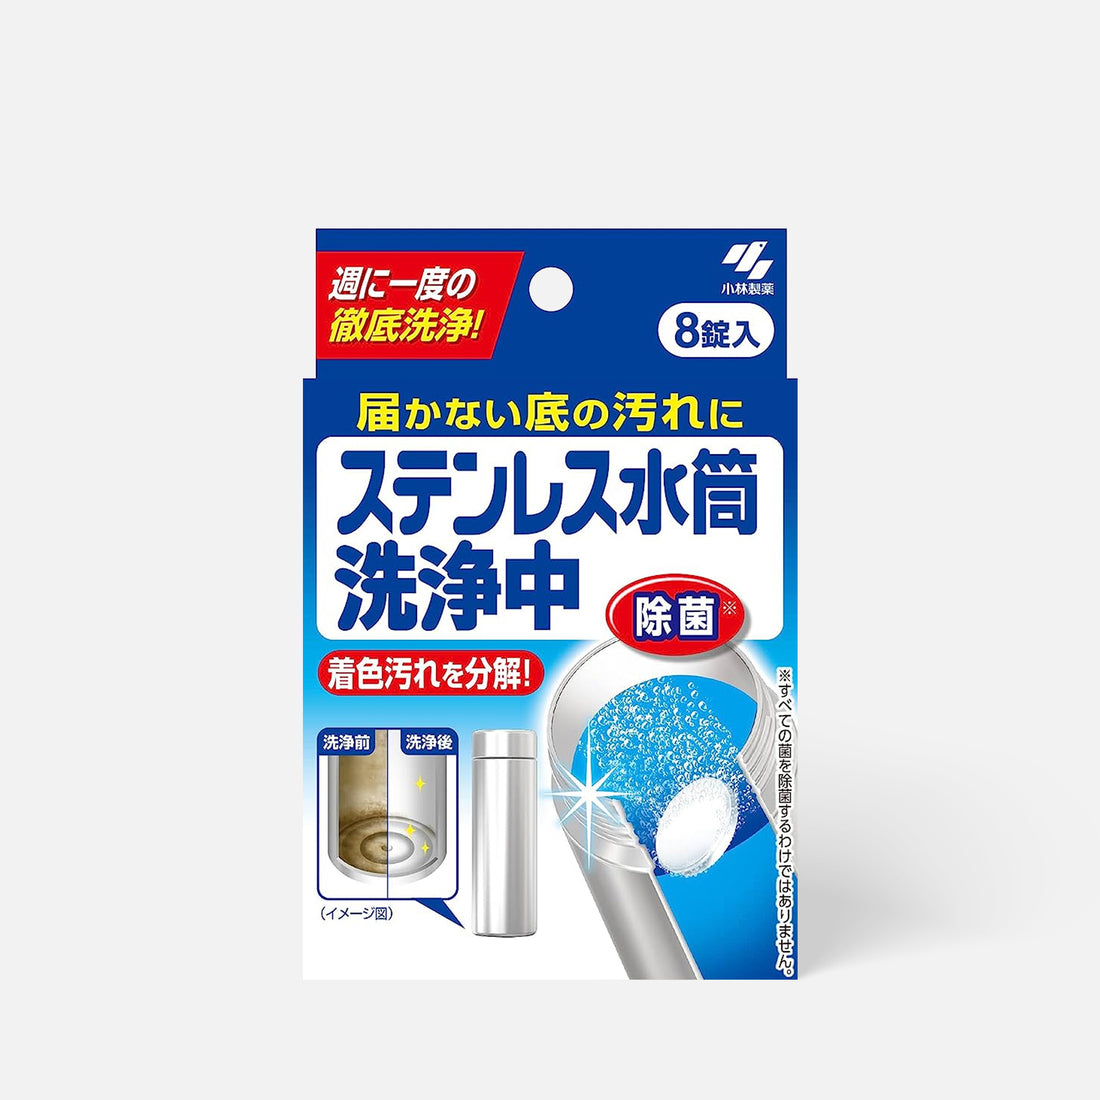 KOBAYASHI Pharmaceutical Stainless Bottle Cleaning Tablets